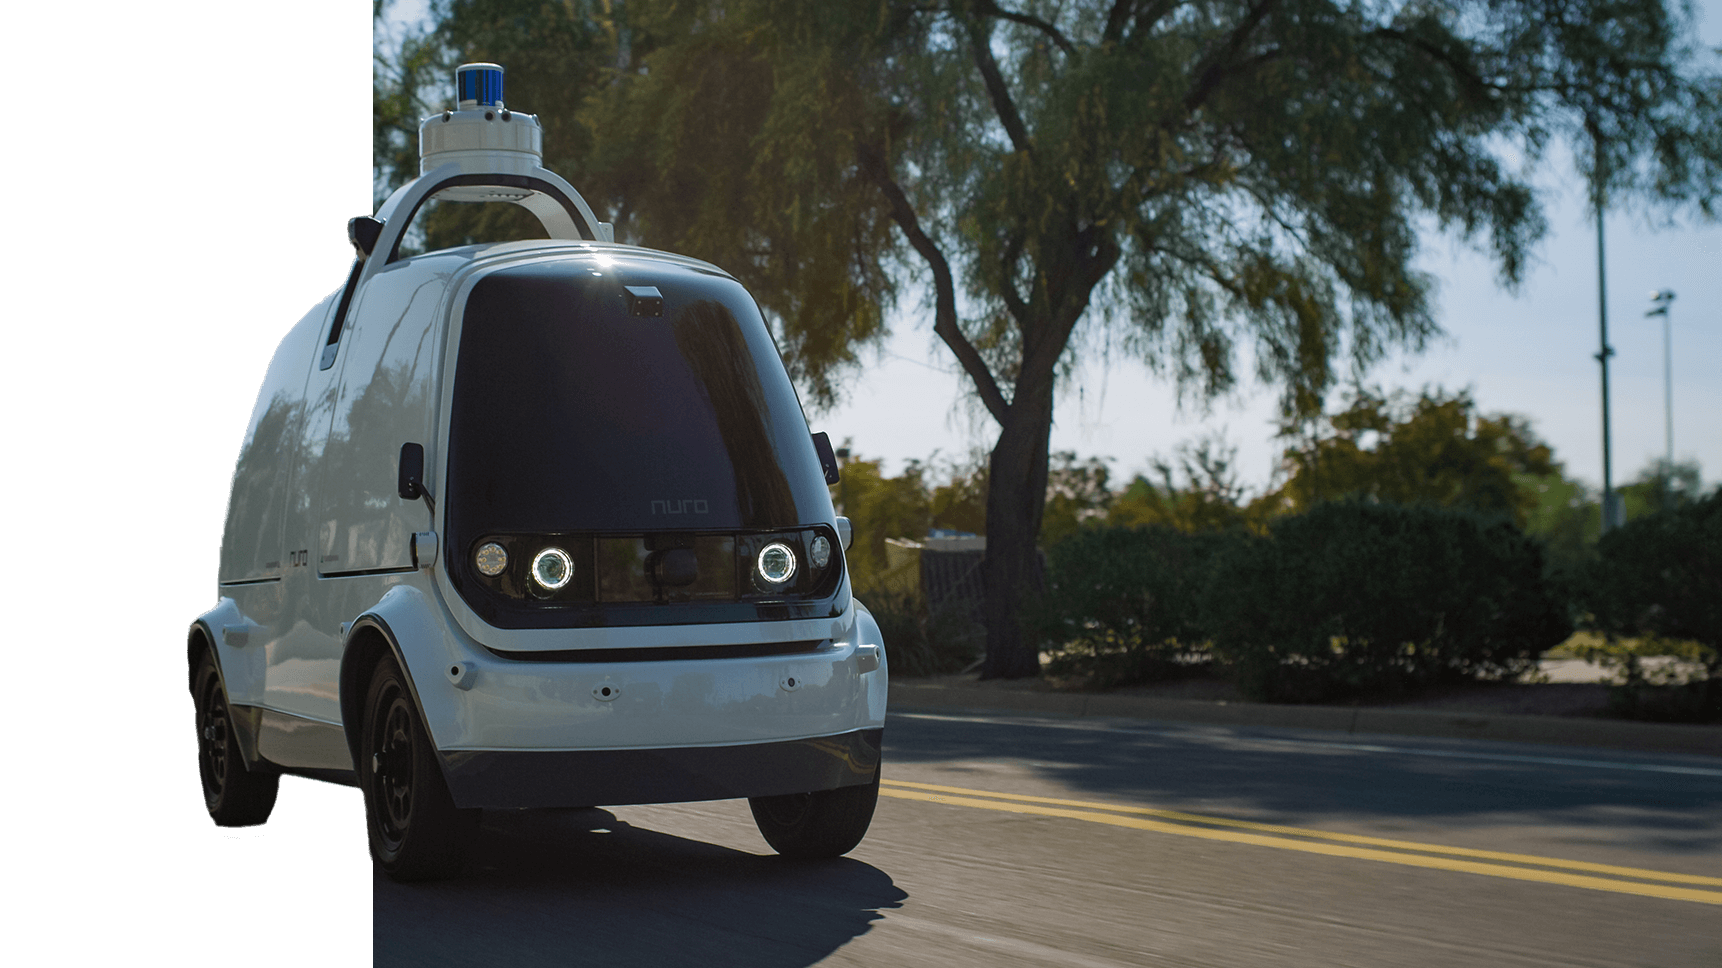 A Nuro autonomous car is seen driving down a road in Scottsdale, Arizona